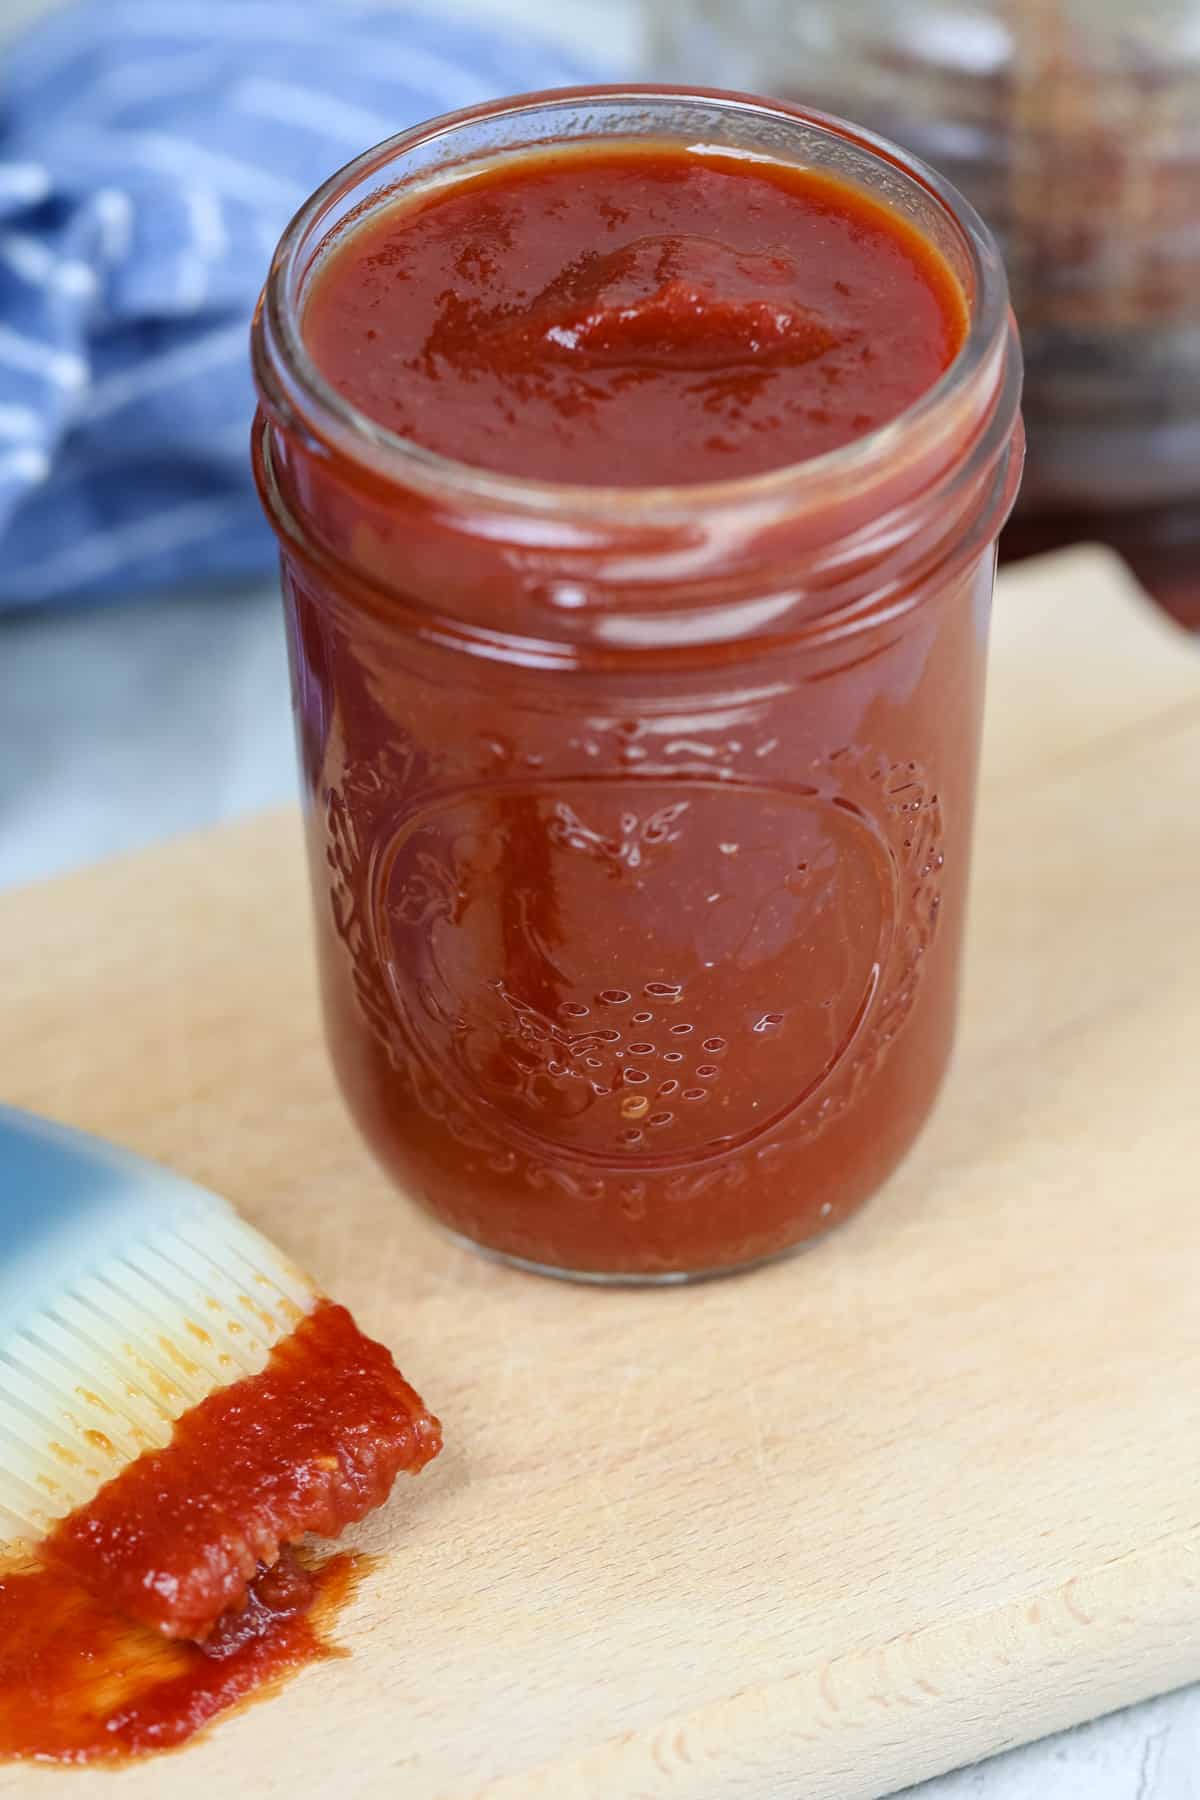 Jar of homemade BBQ sauce in glass jar.